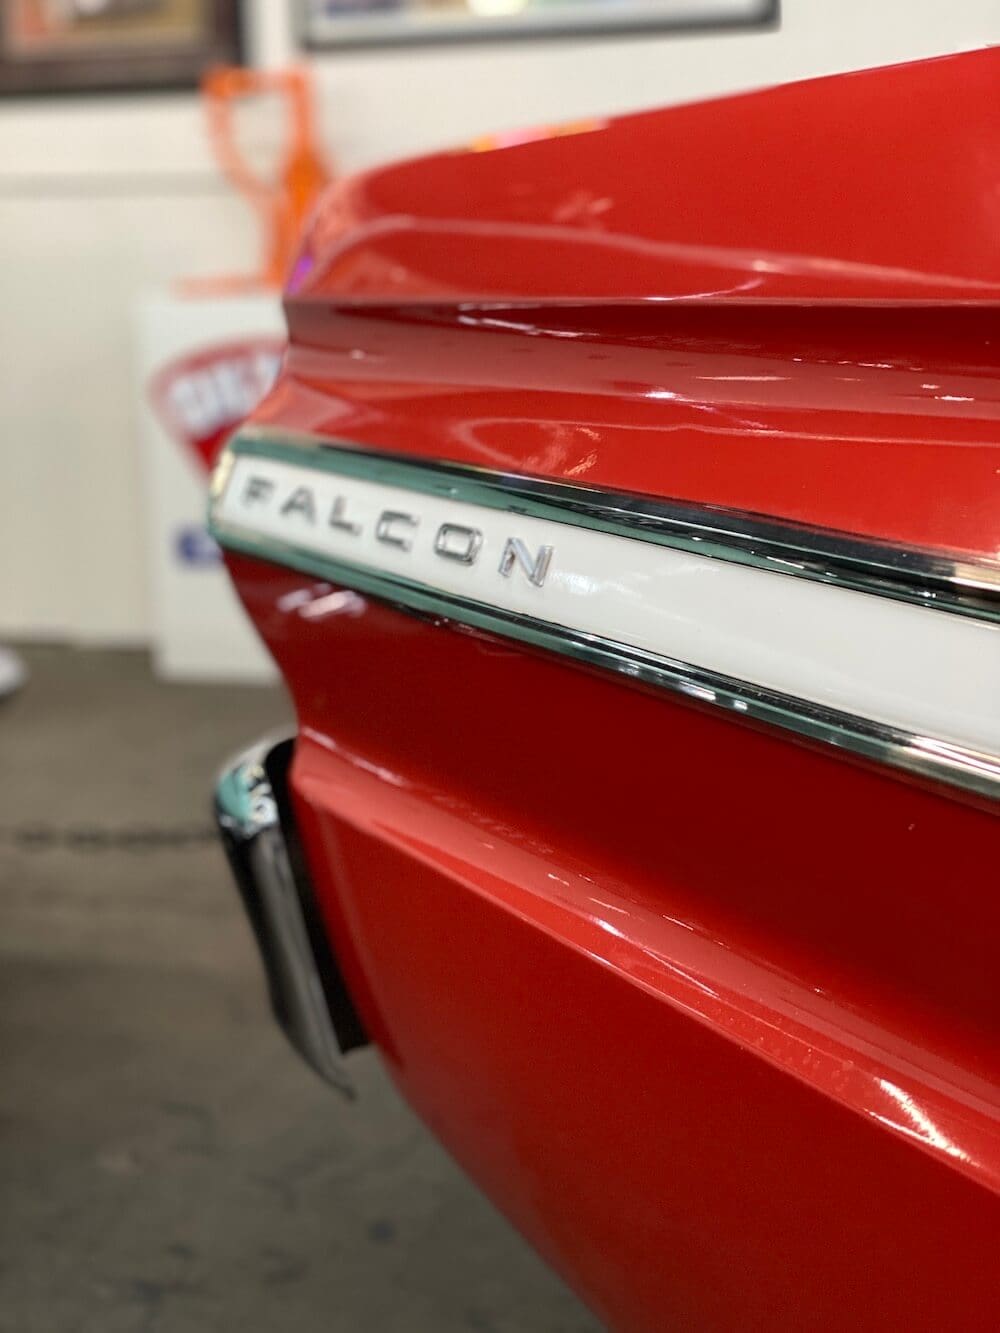 1965 Ford Falcon | Miles Through Time